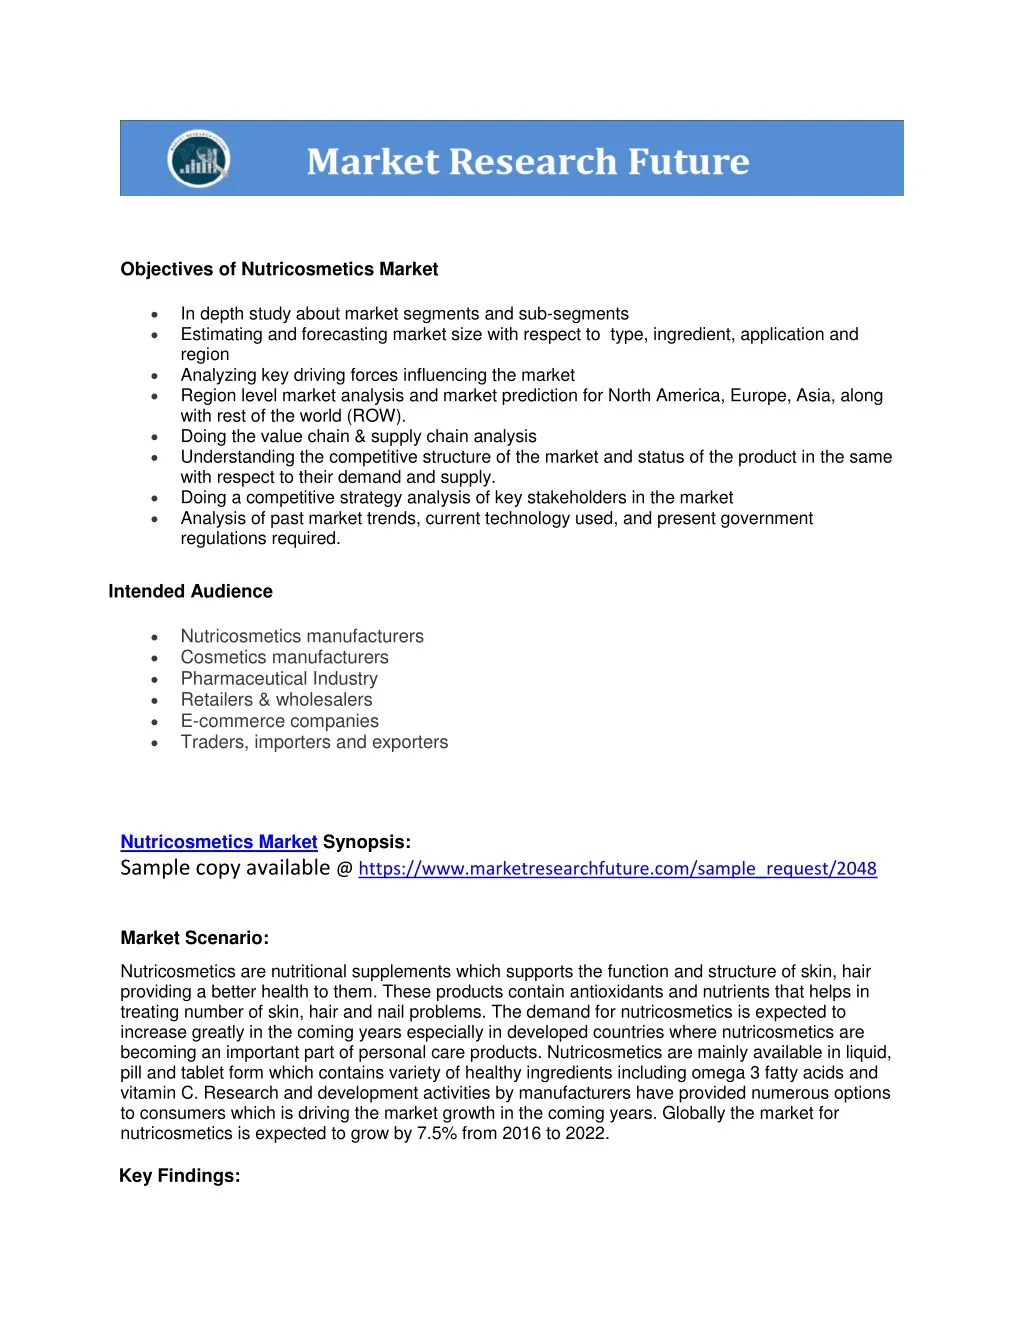 objectives of nutricosmetics market